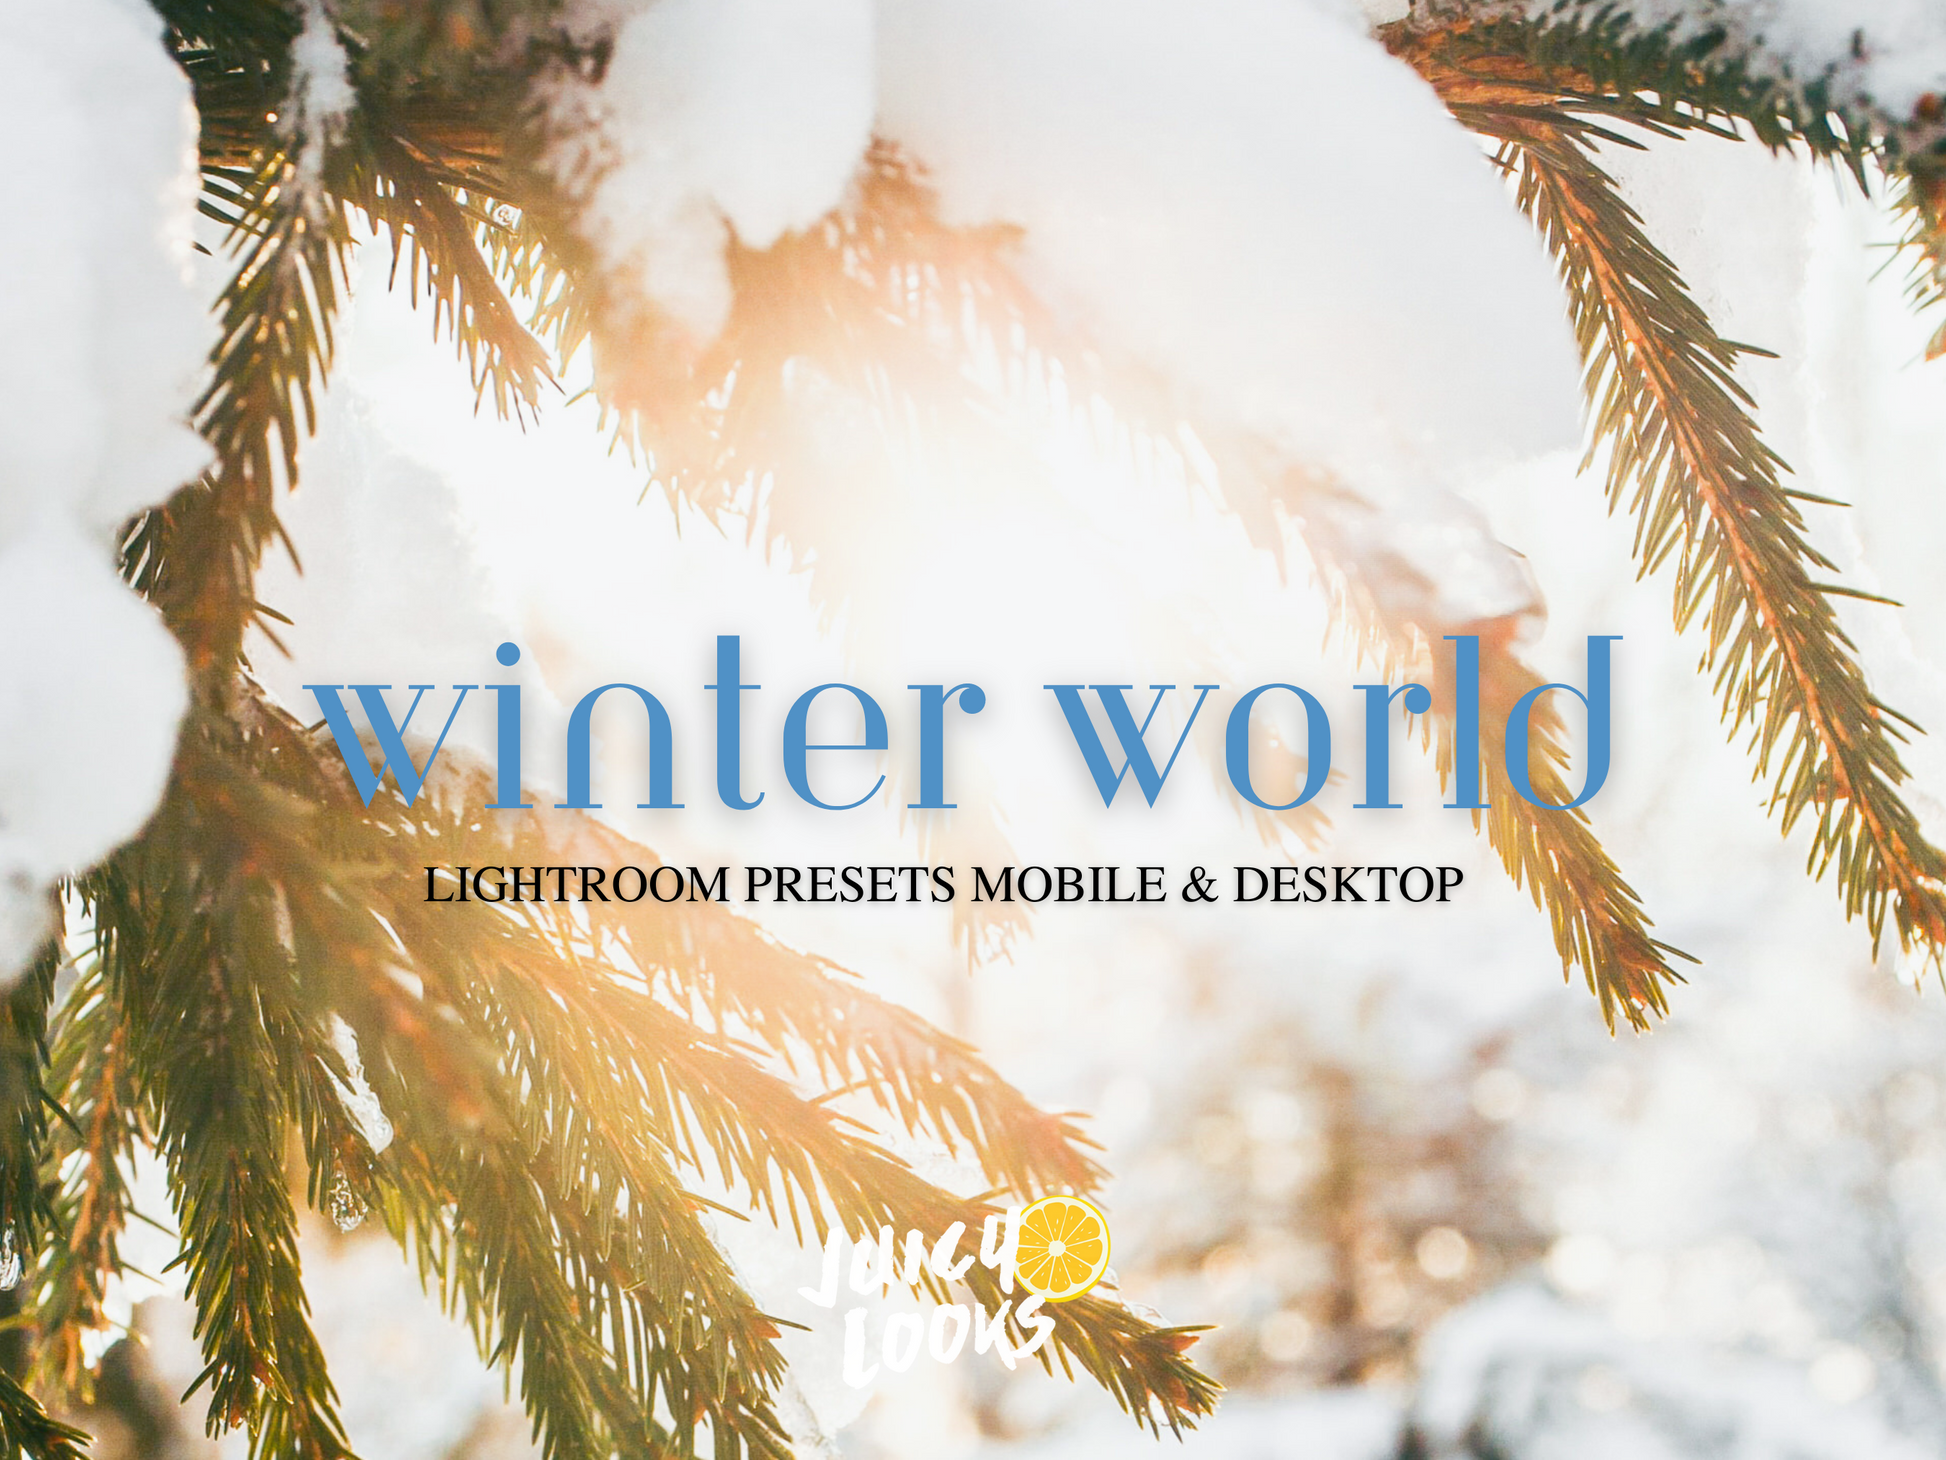 Winter World Lightroom Presets for Mobile & Desktop - Juicy Looks Presets